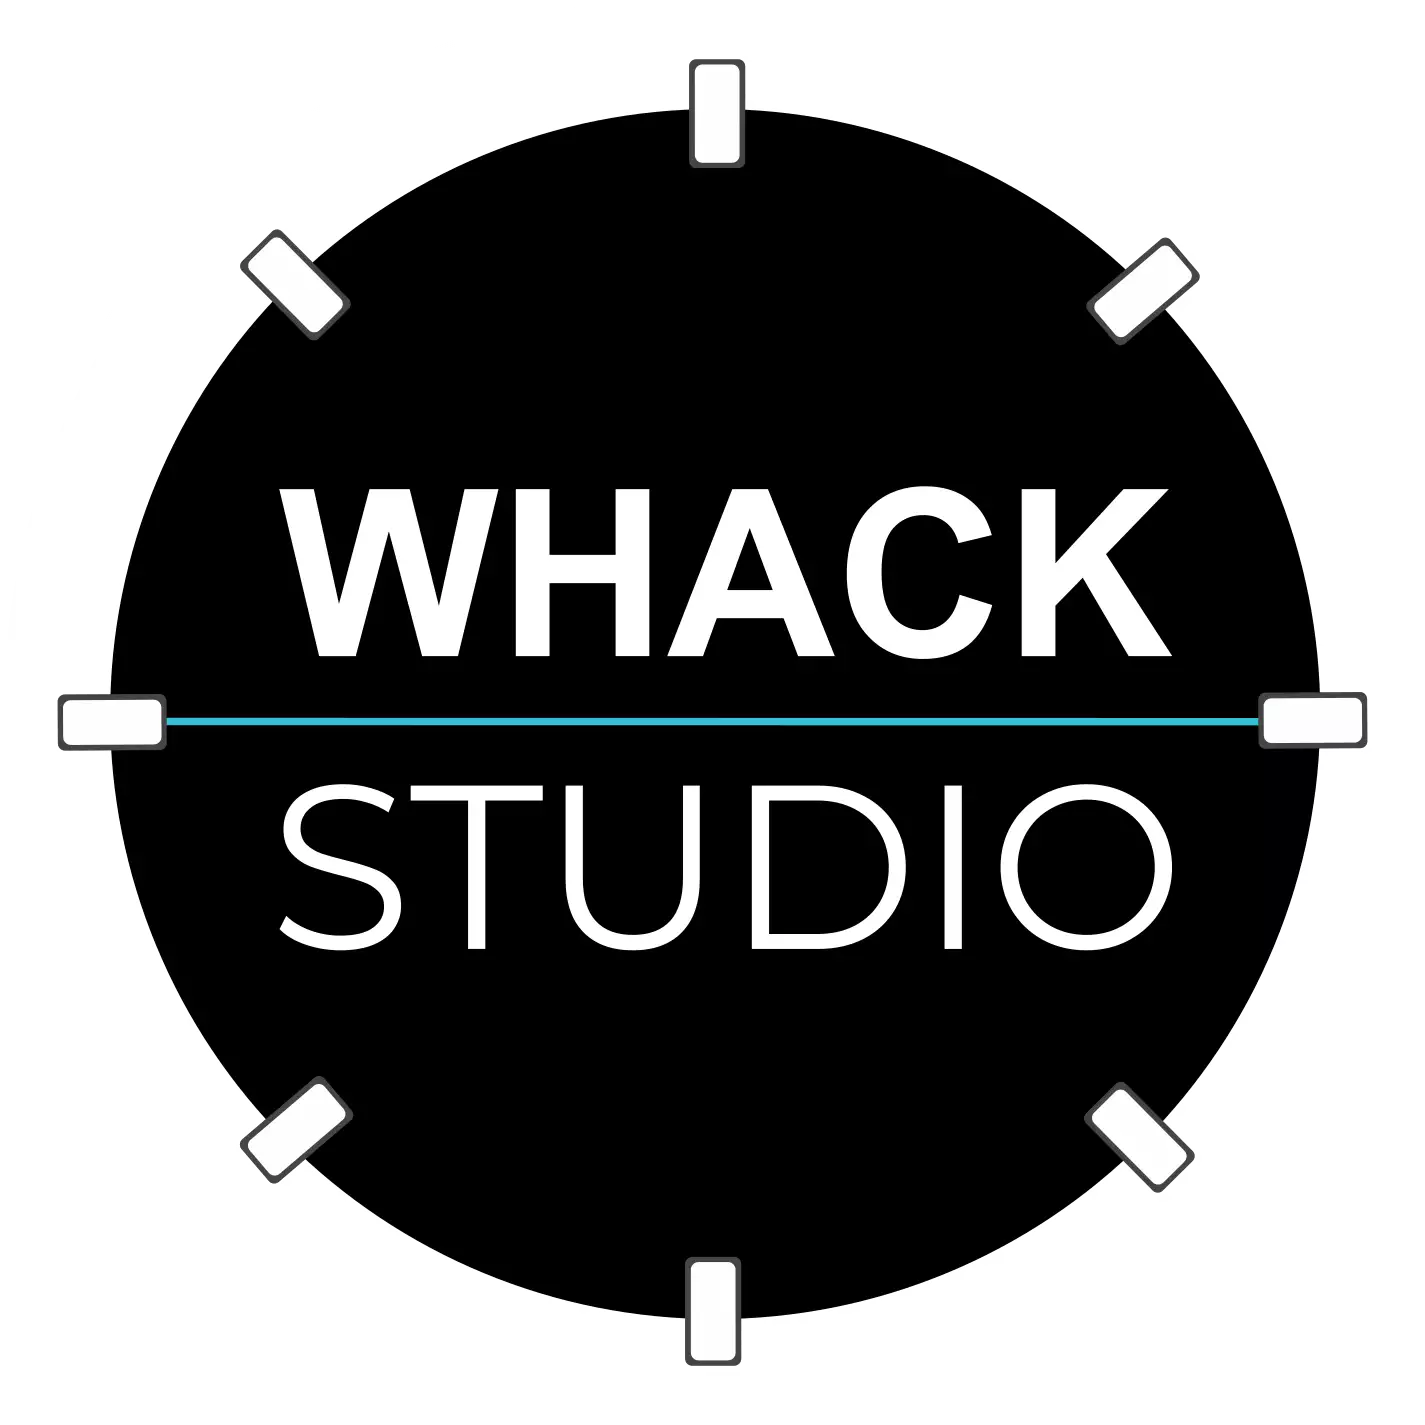 Whack studio Main logo